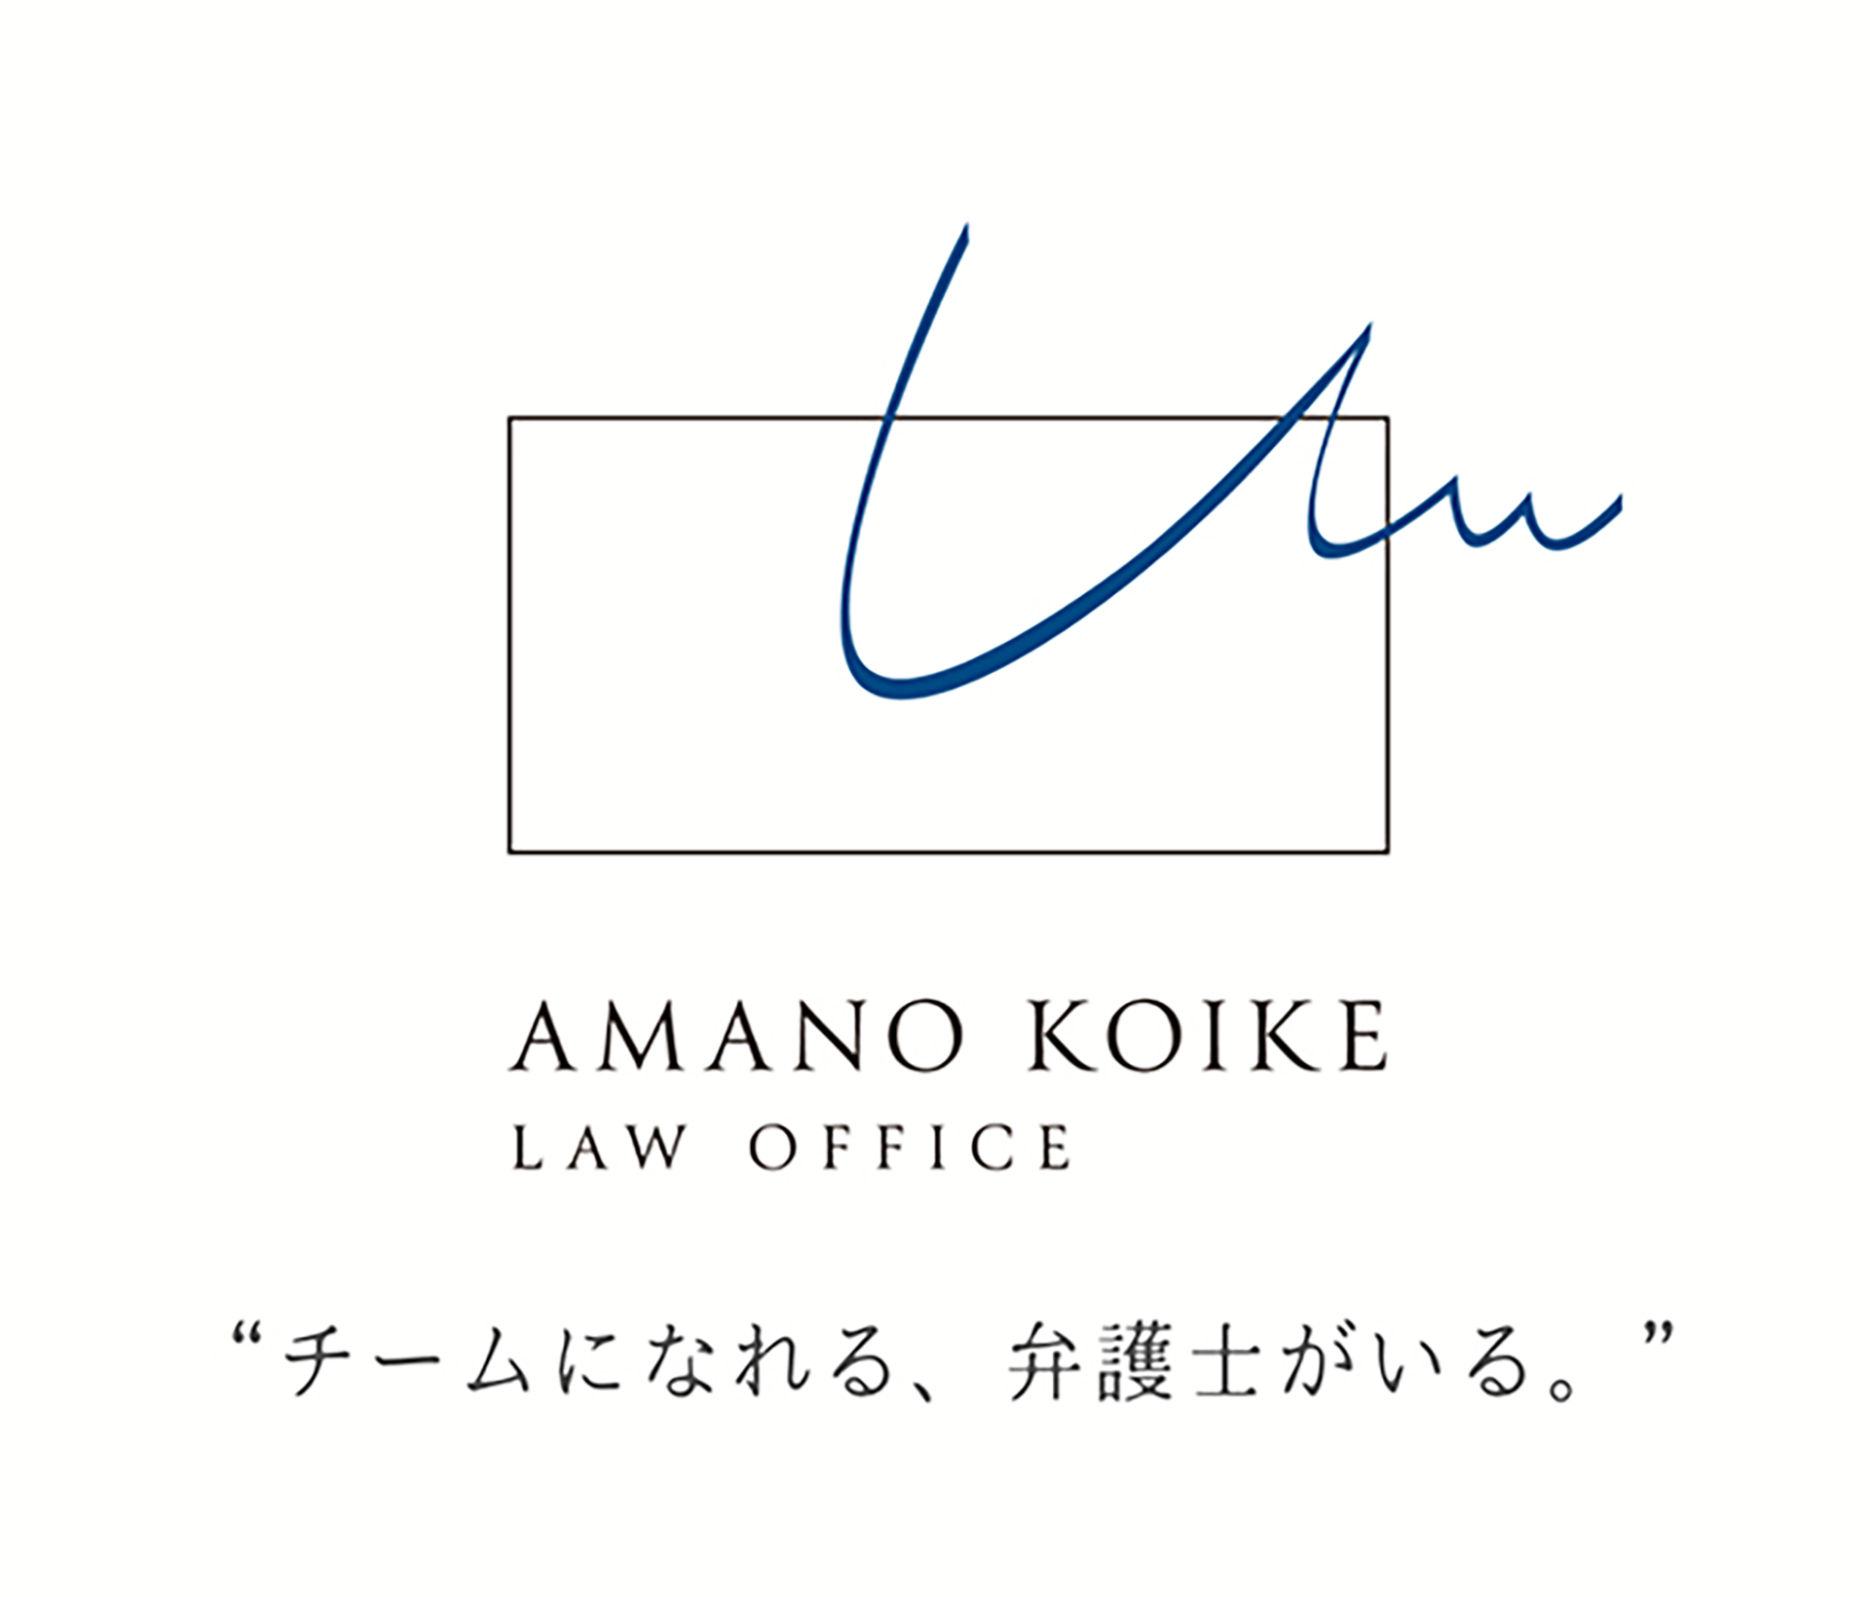 amanokoike5 2 - ホームページ制作事例。仙台の弁護士法人 天野・小池法律事務所様